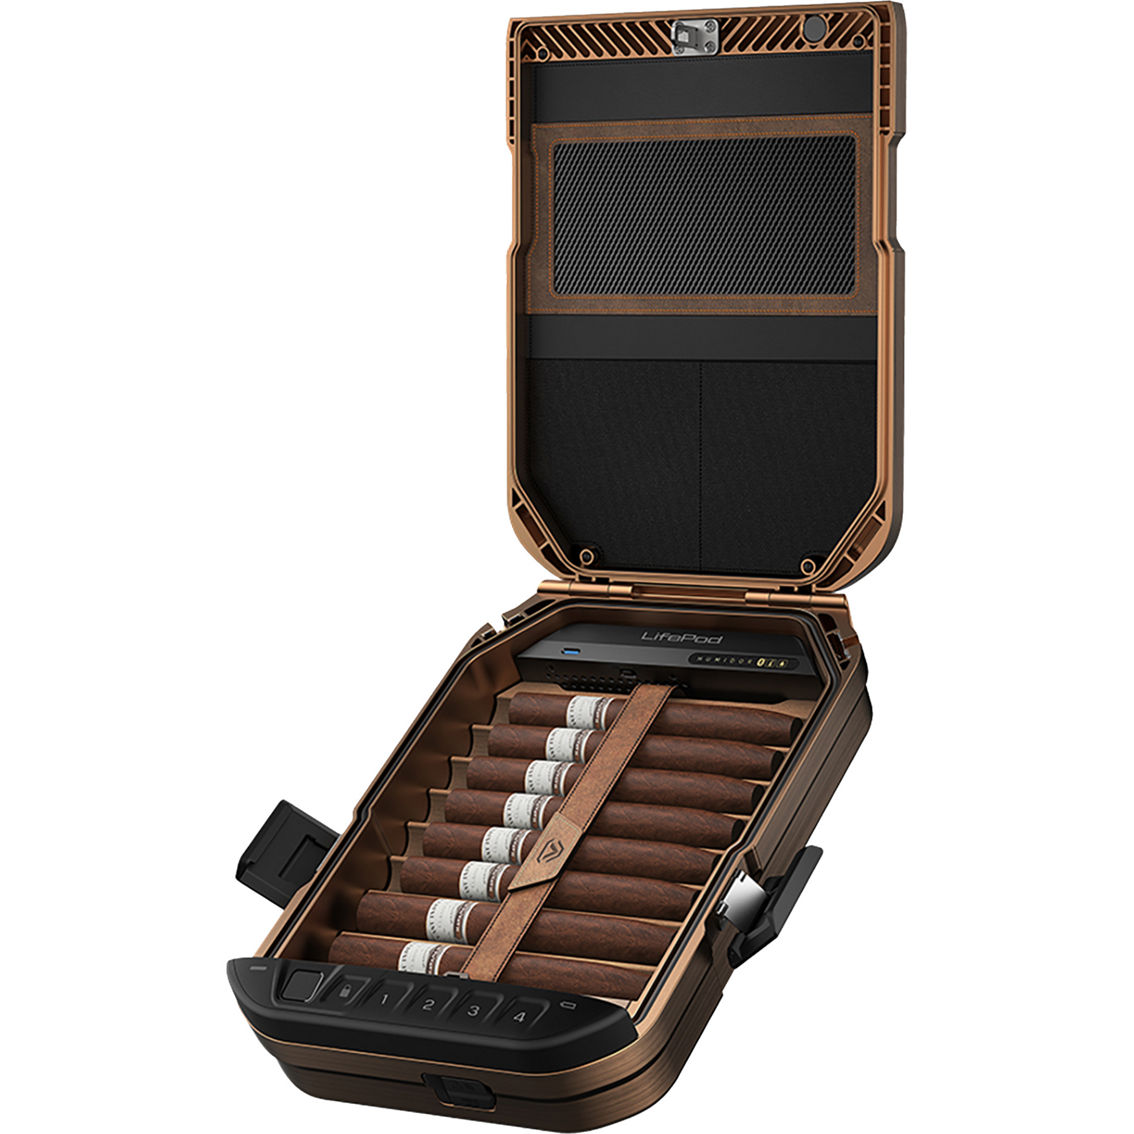 Vaultek LifePod Cigar Humidor Series LH20B Safe - Image 4 of 7